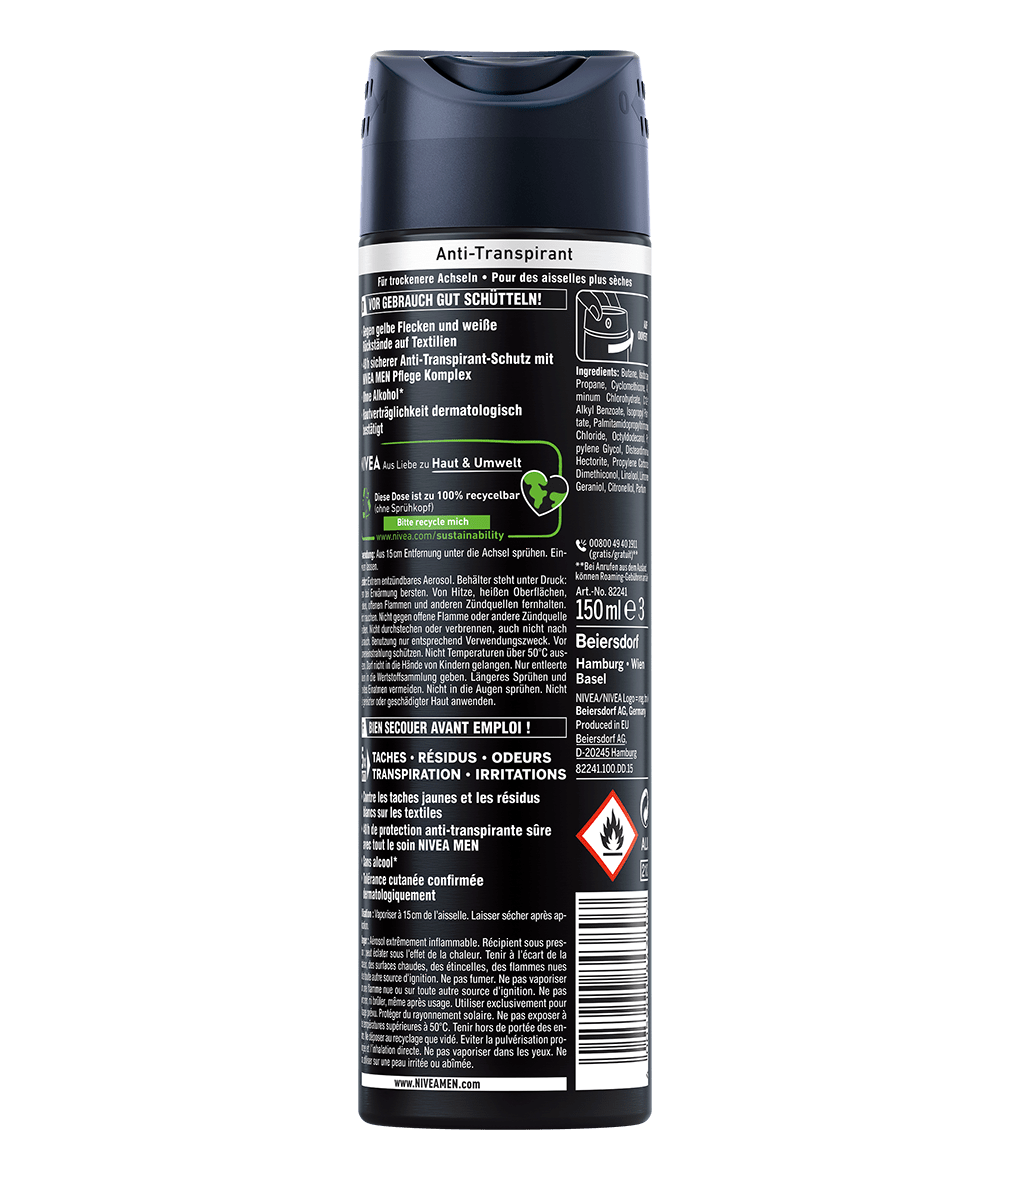 MEN Black & White Invisible Original Anti-Transpirant Spray_150ml